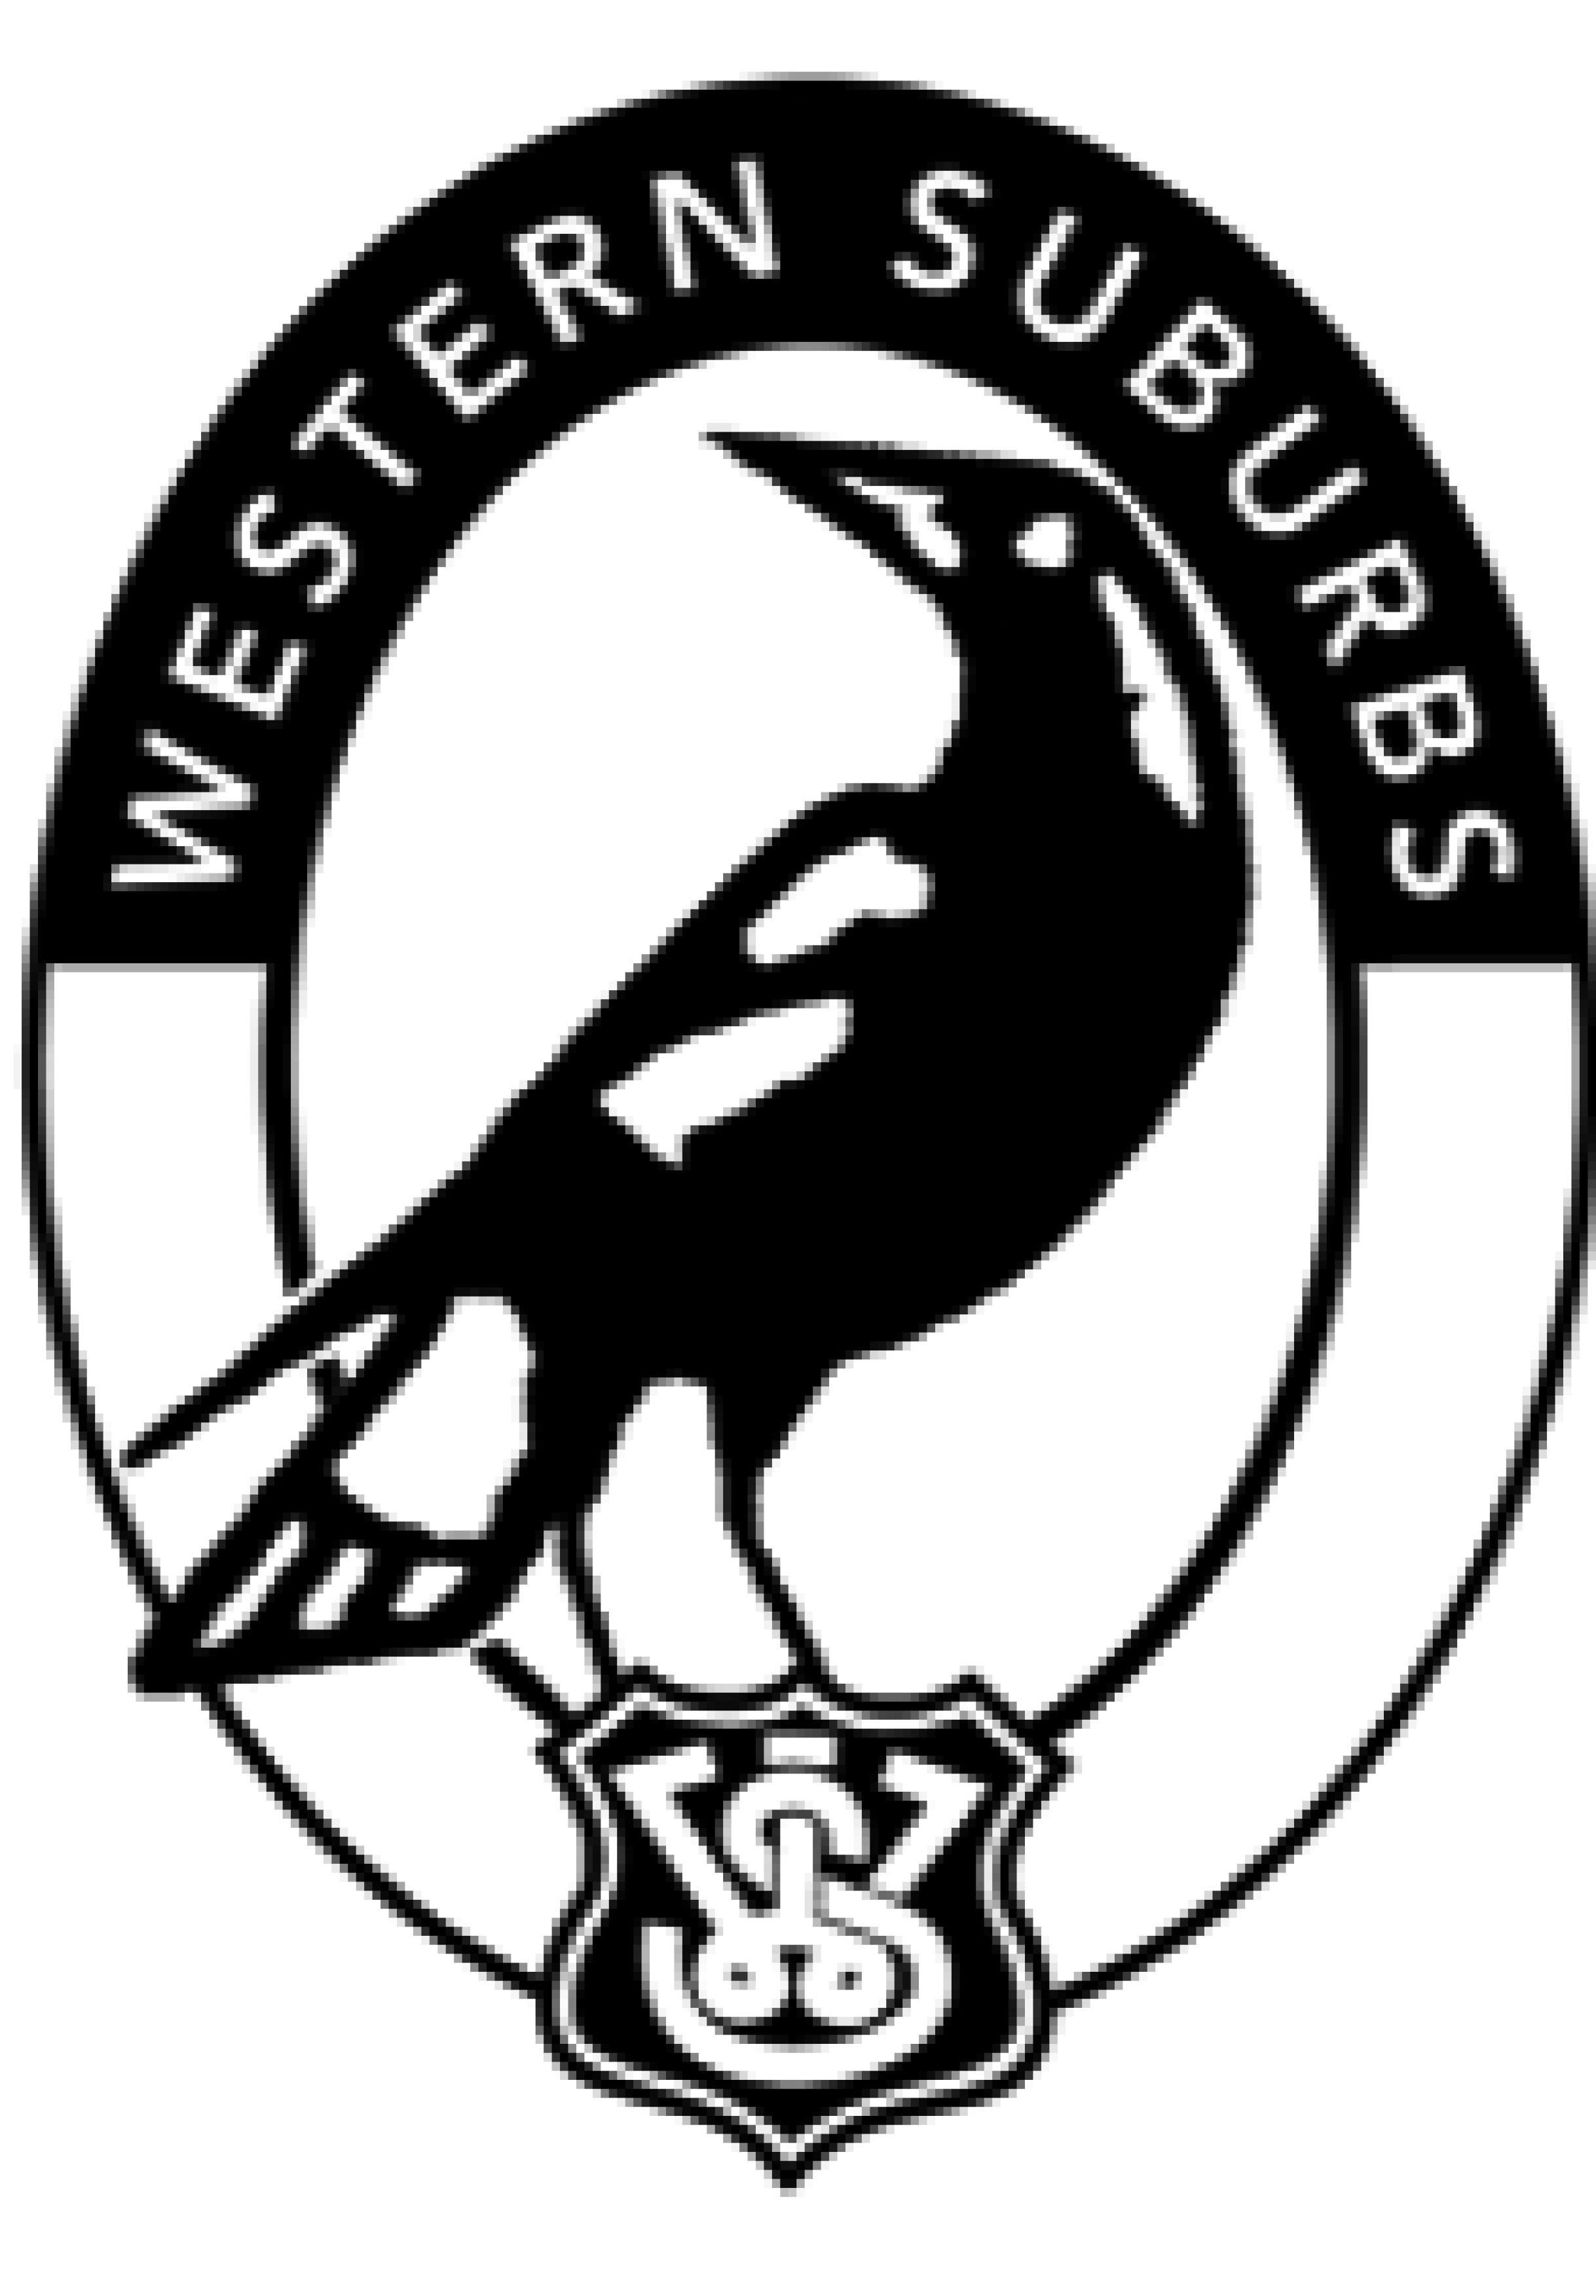 Wests Magpies AFL Club